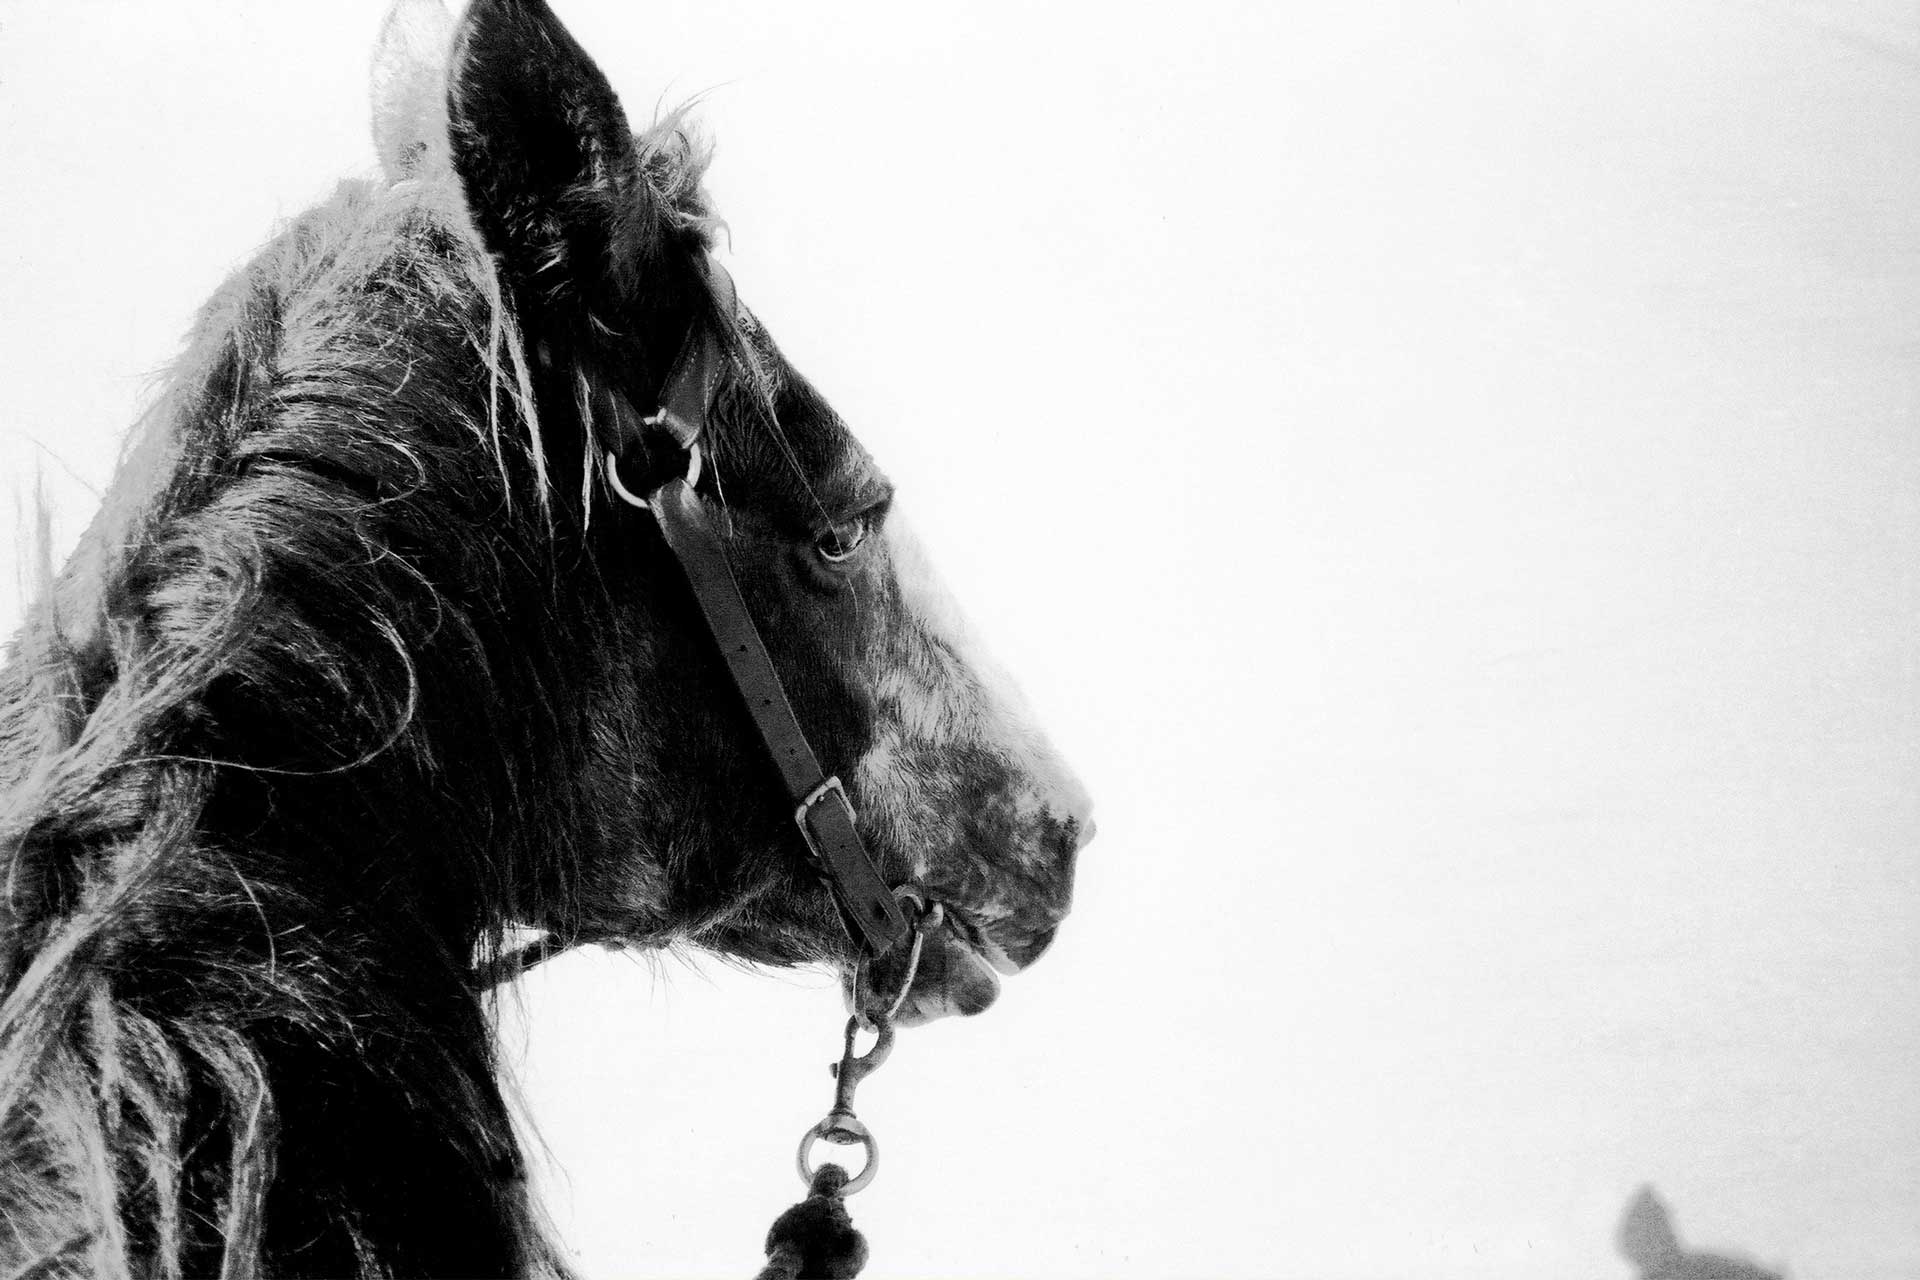 Laure-Maud_photographe_08_cheval-02